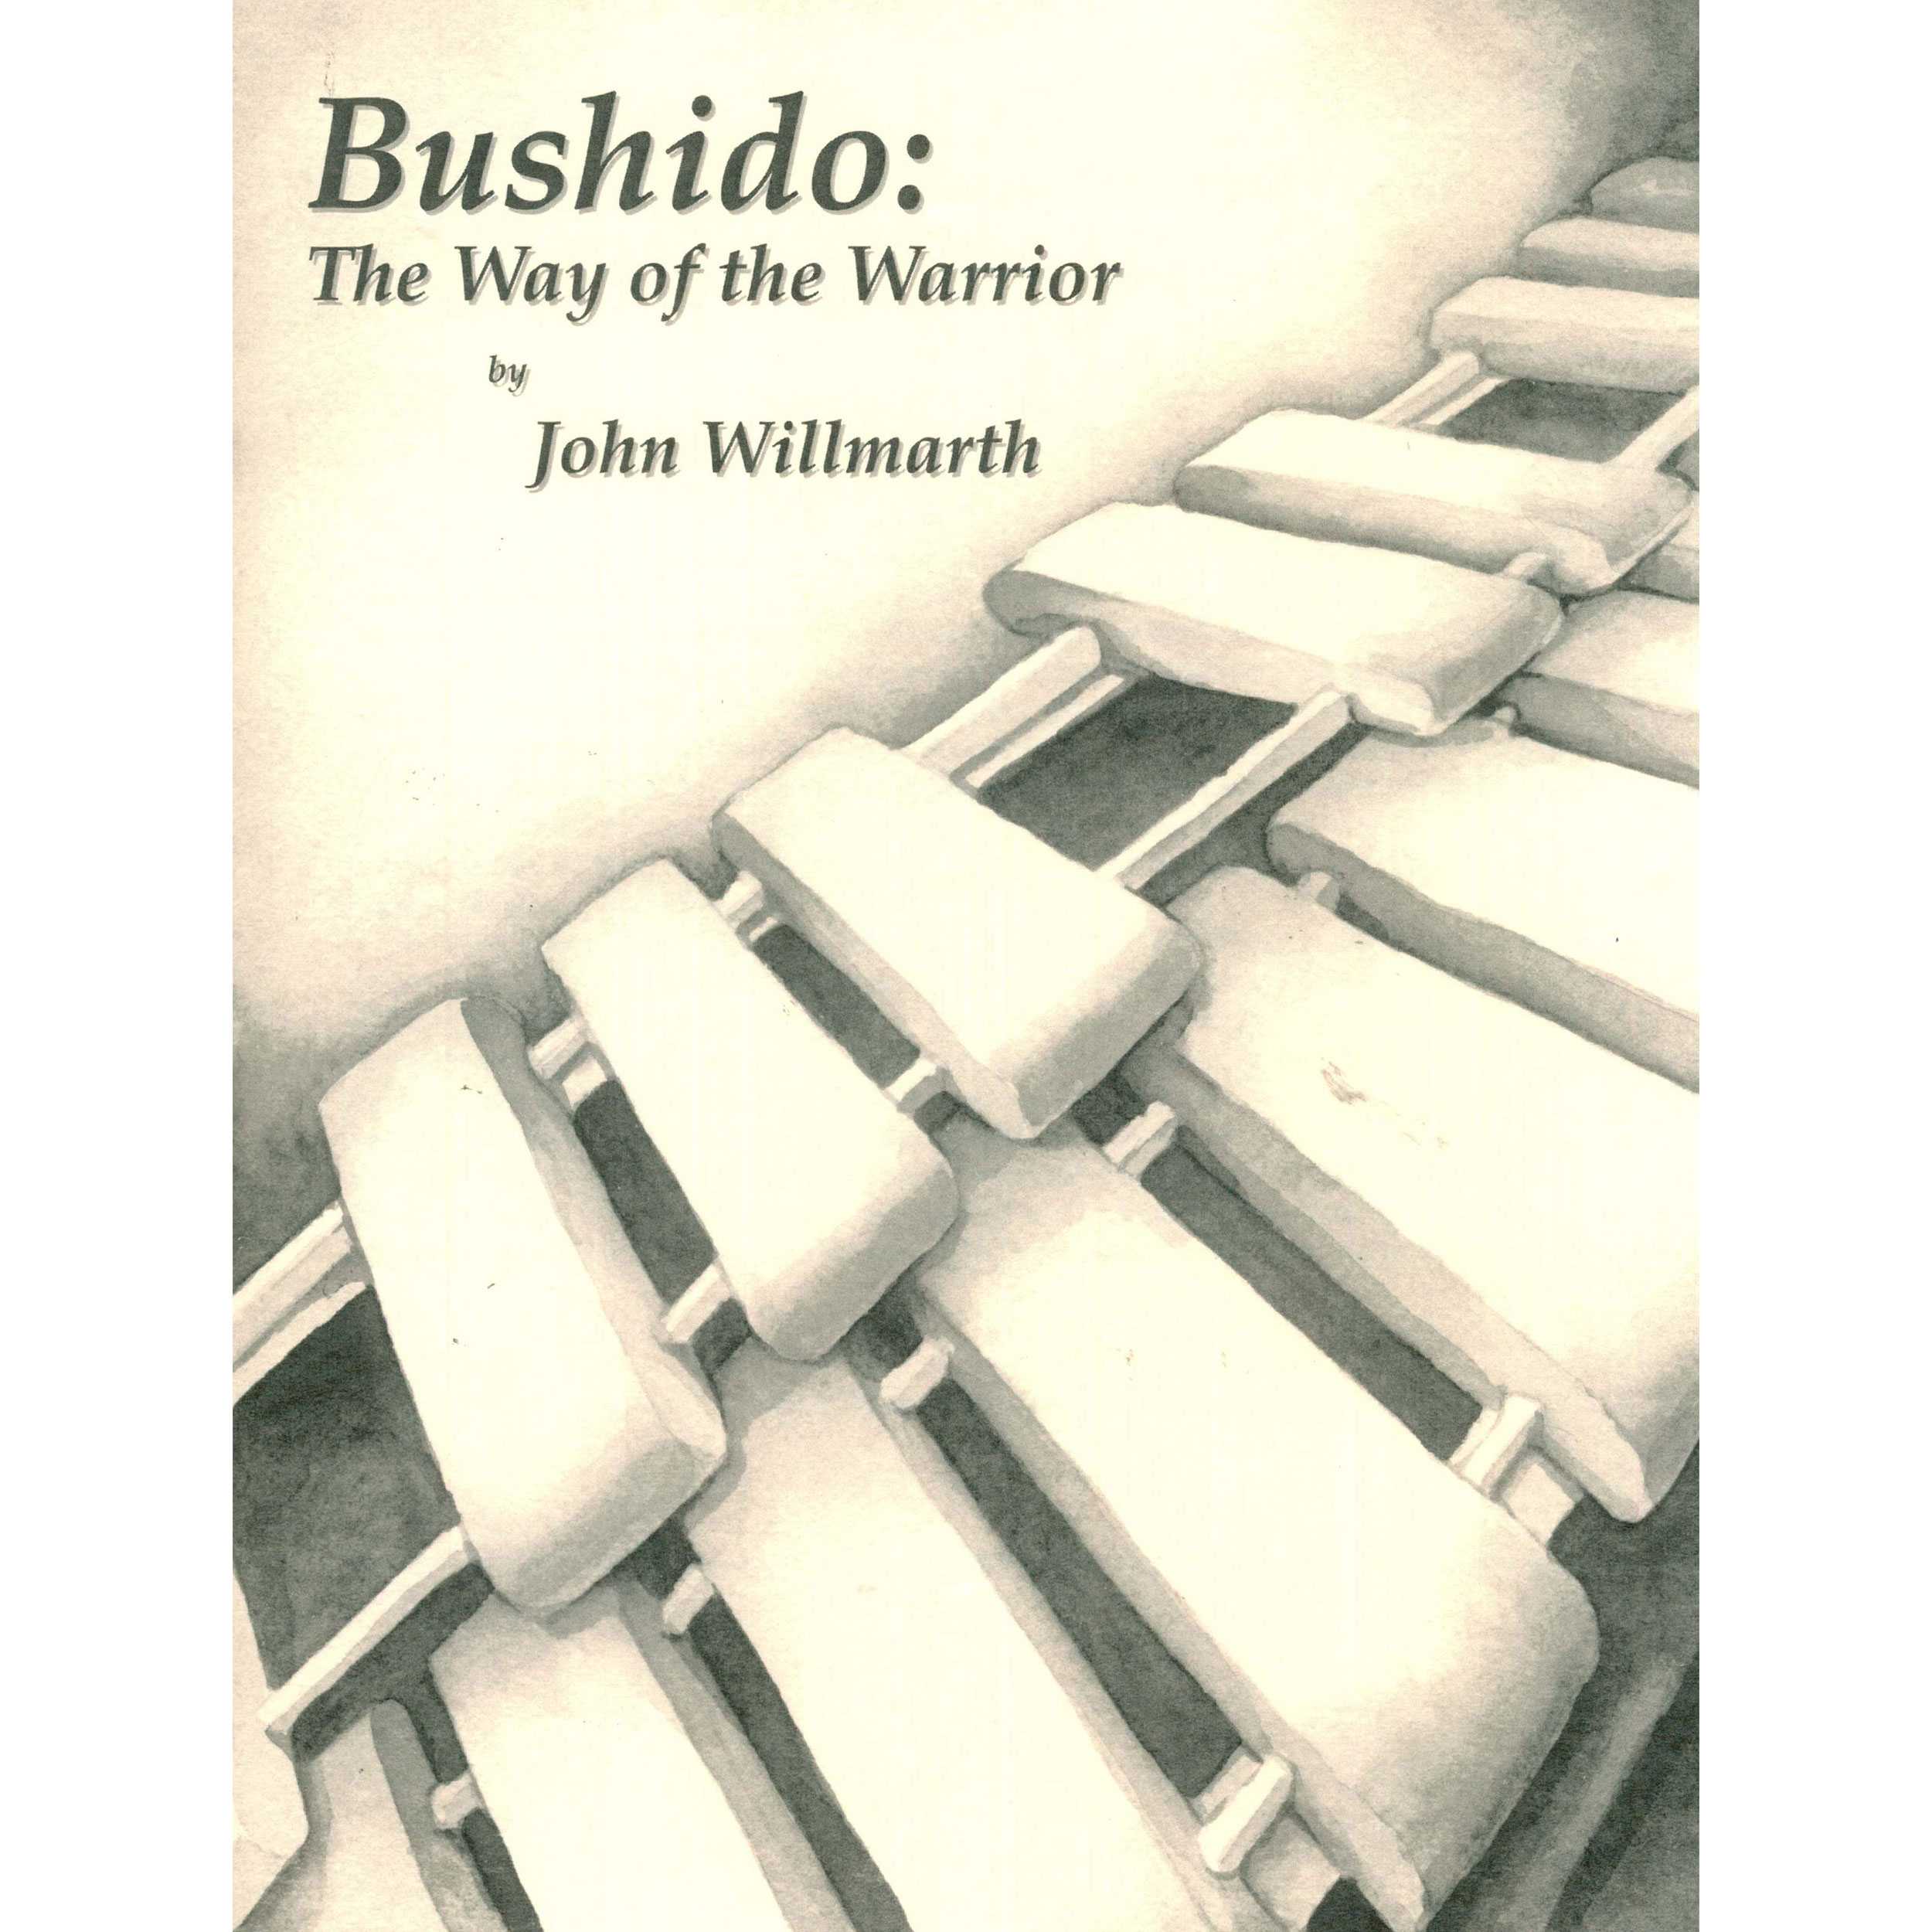 Bushido: The Way of the Warrior by John Willmarth